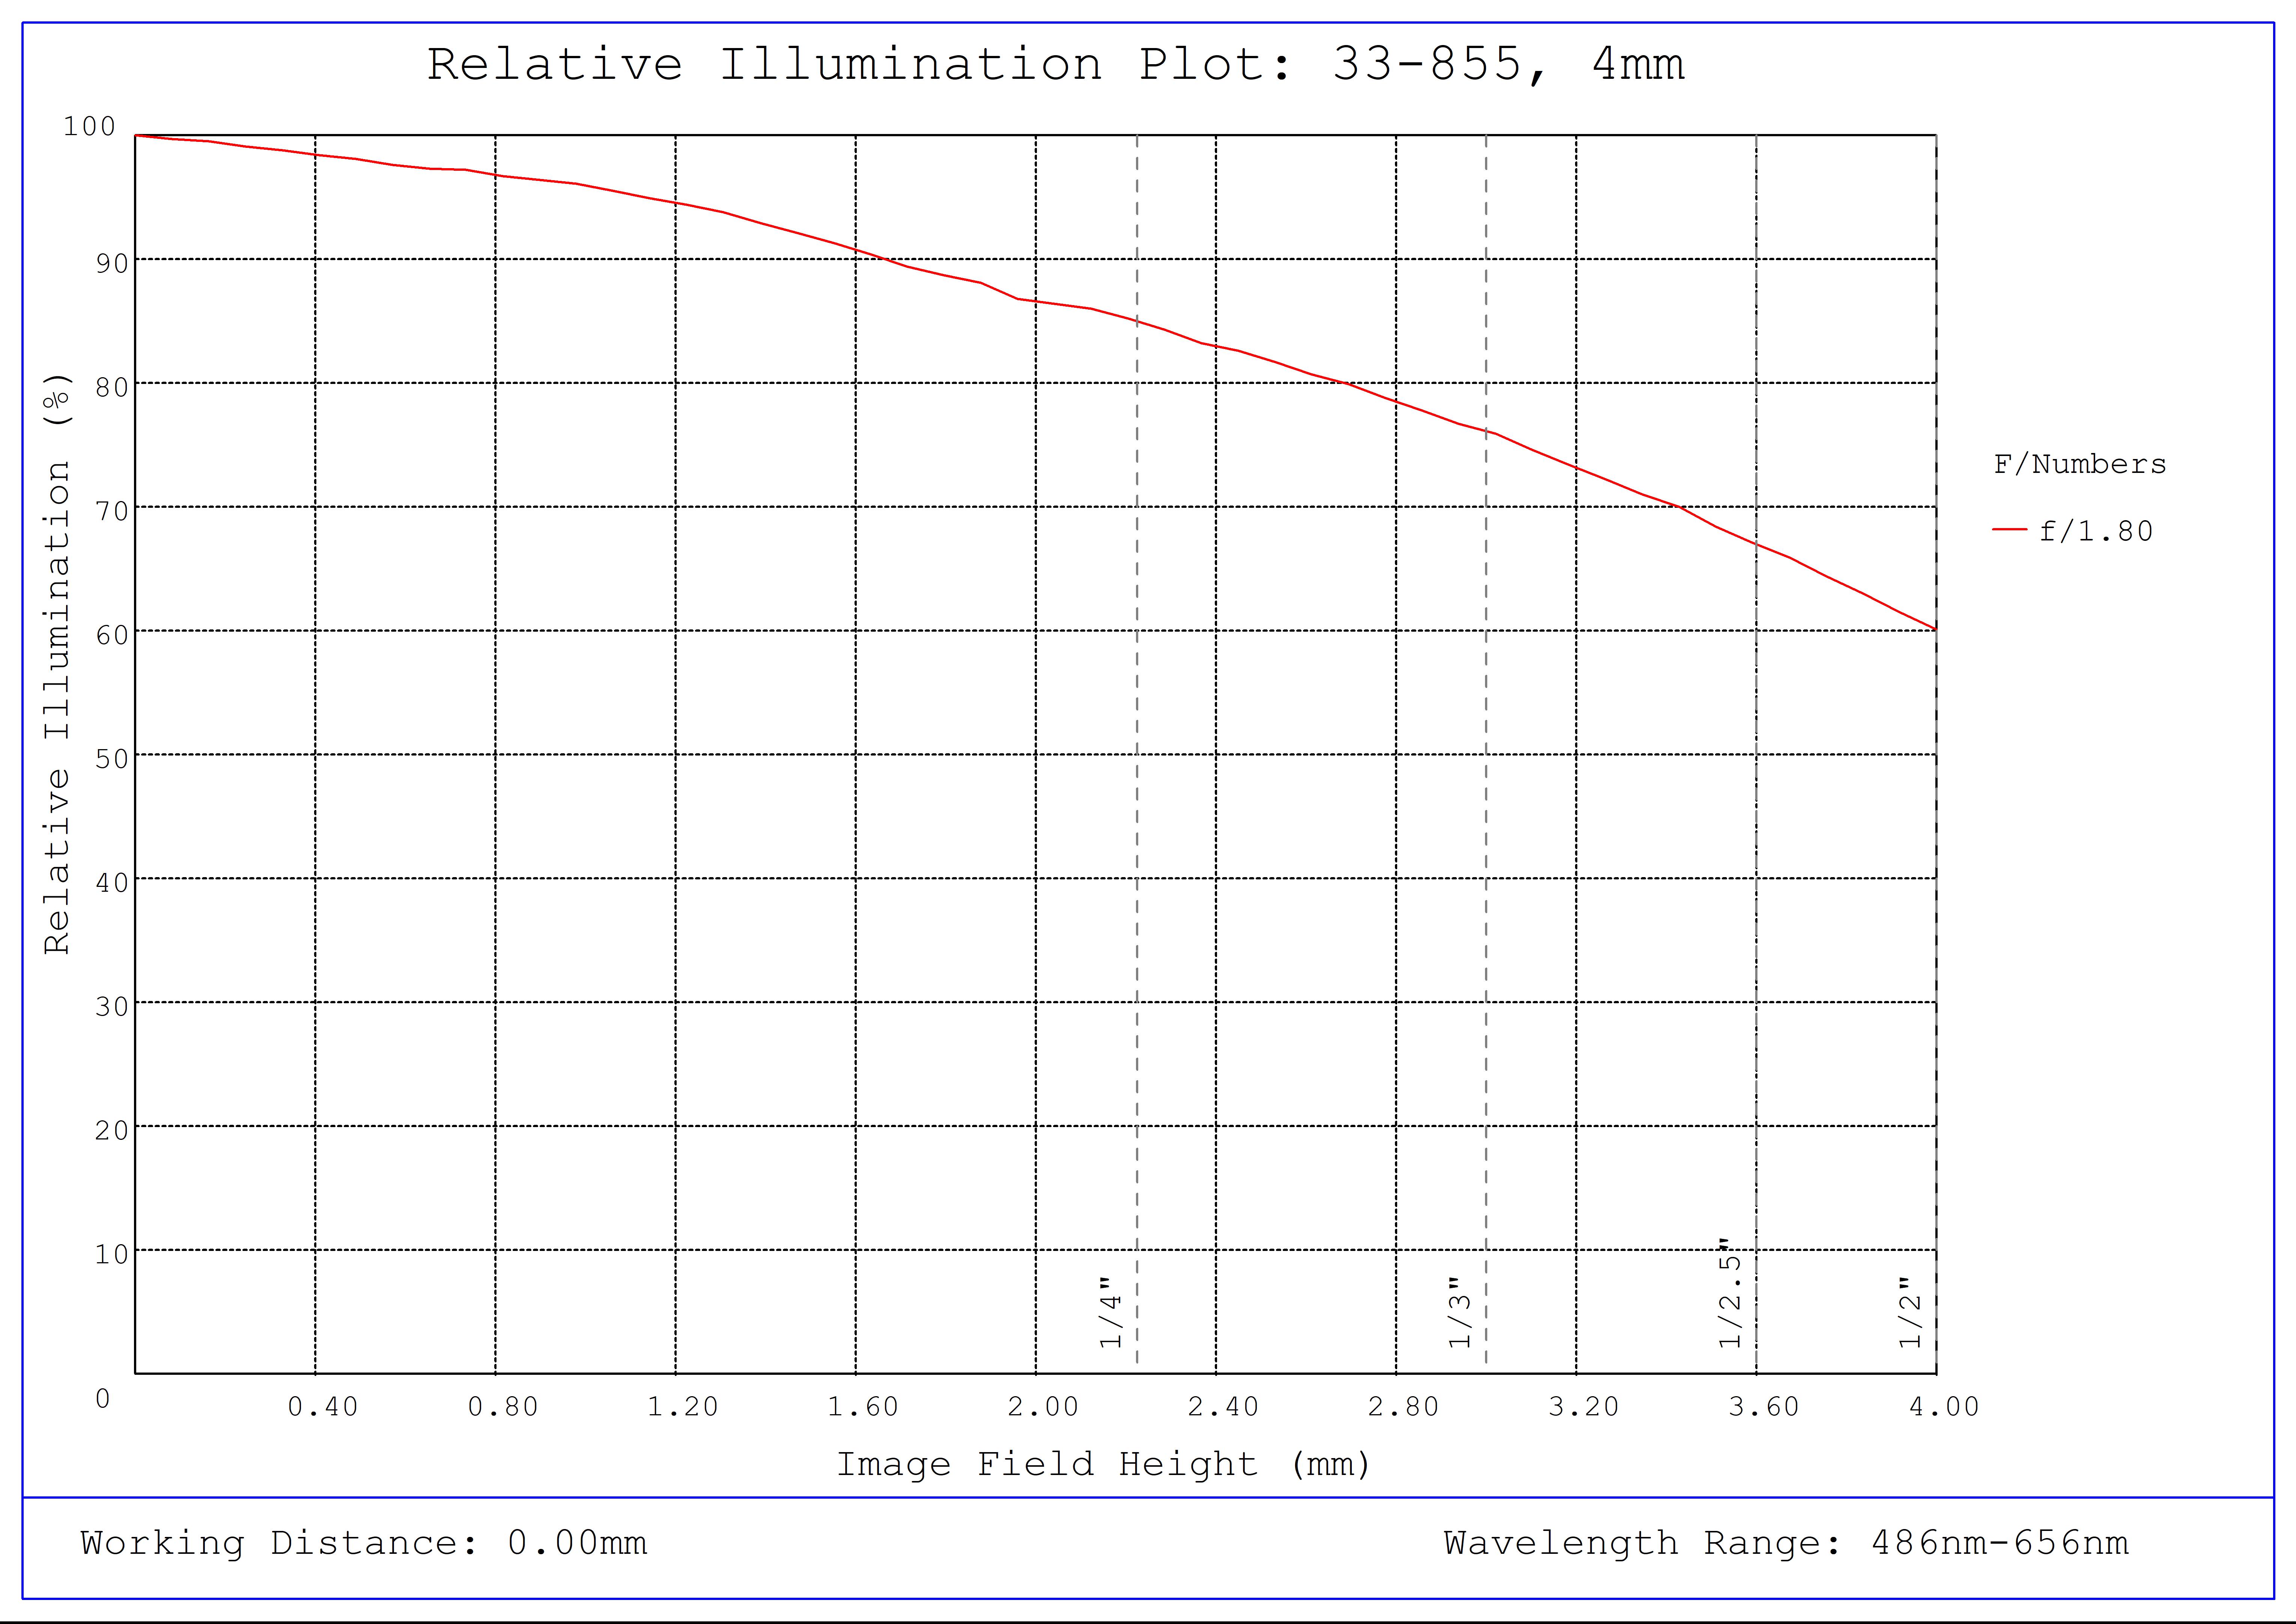 #33-855, 4mm, f/1.8 UCi Series Fixed Focal Length Lens, Relative Illumination Plot